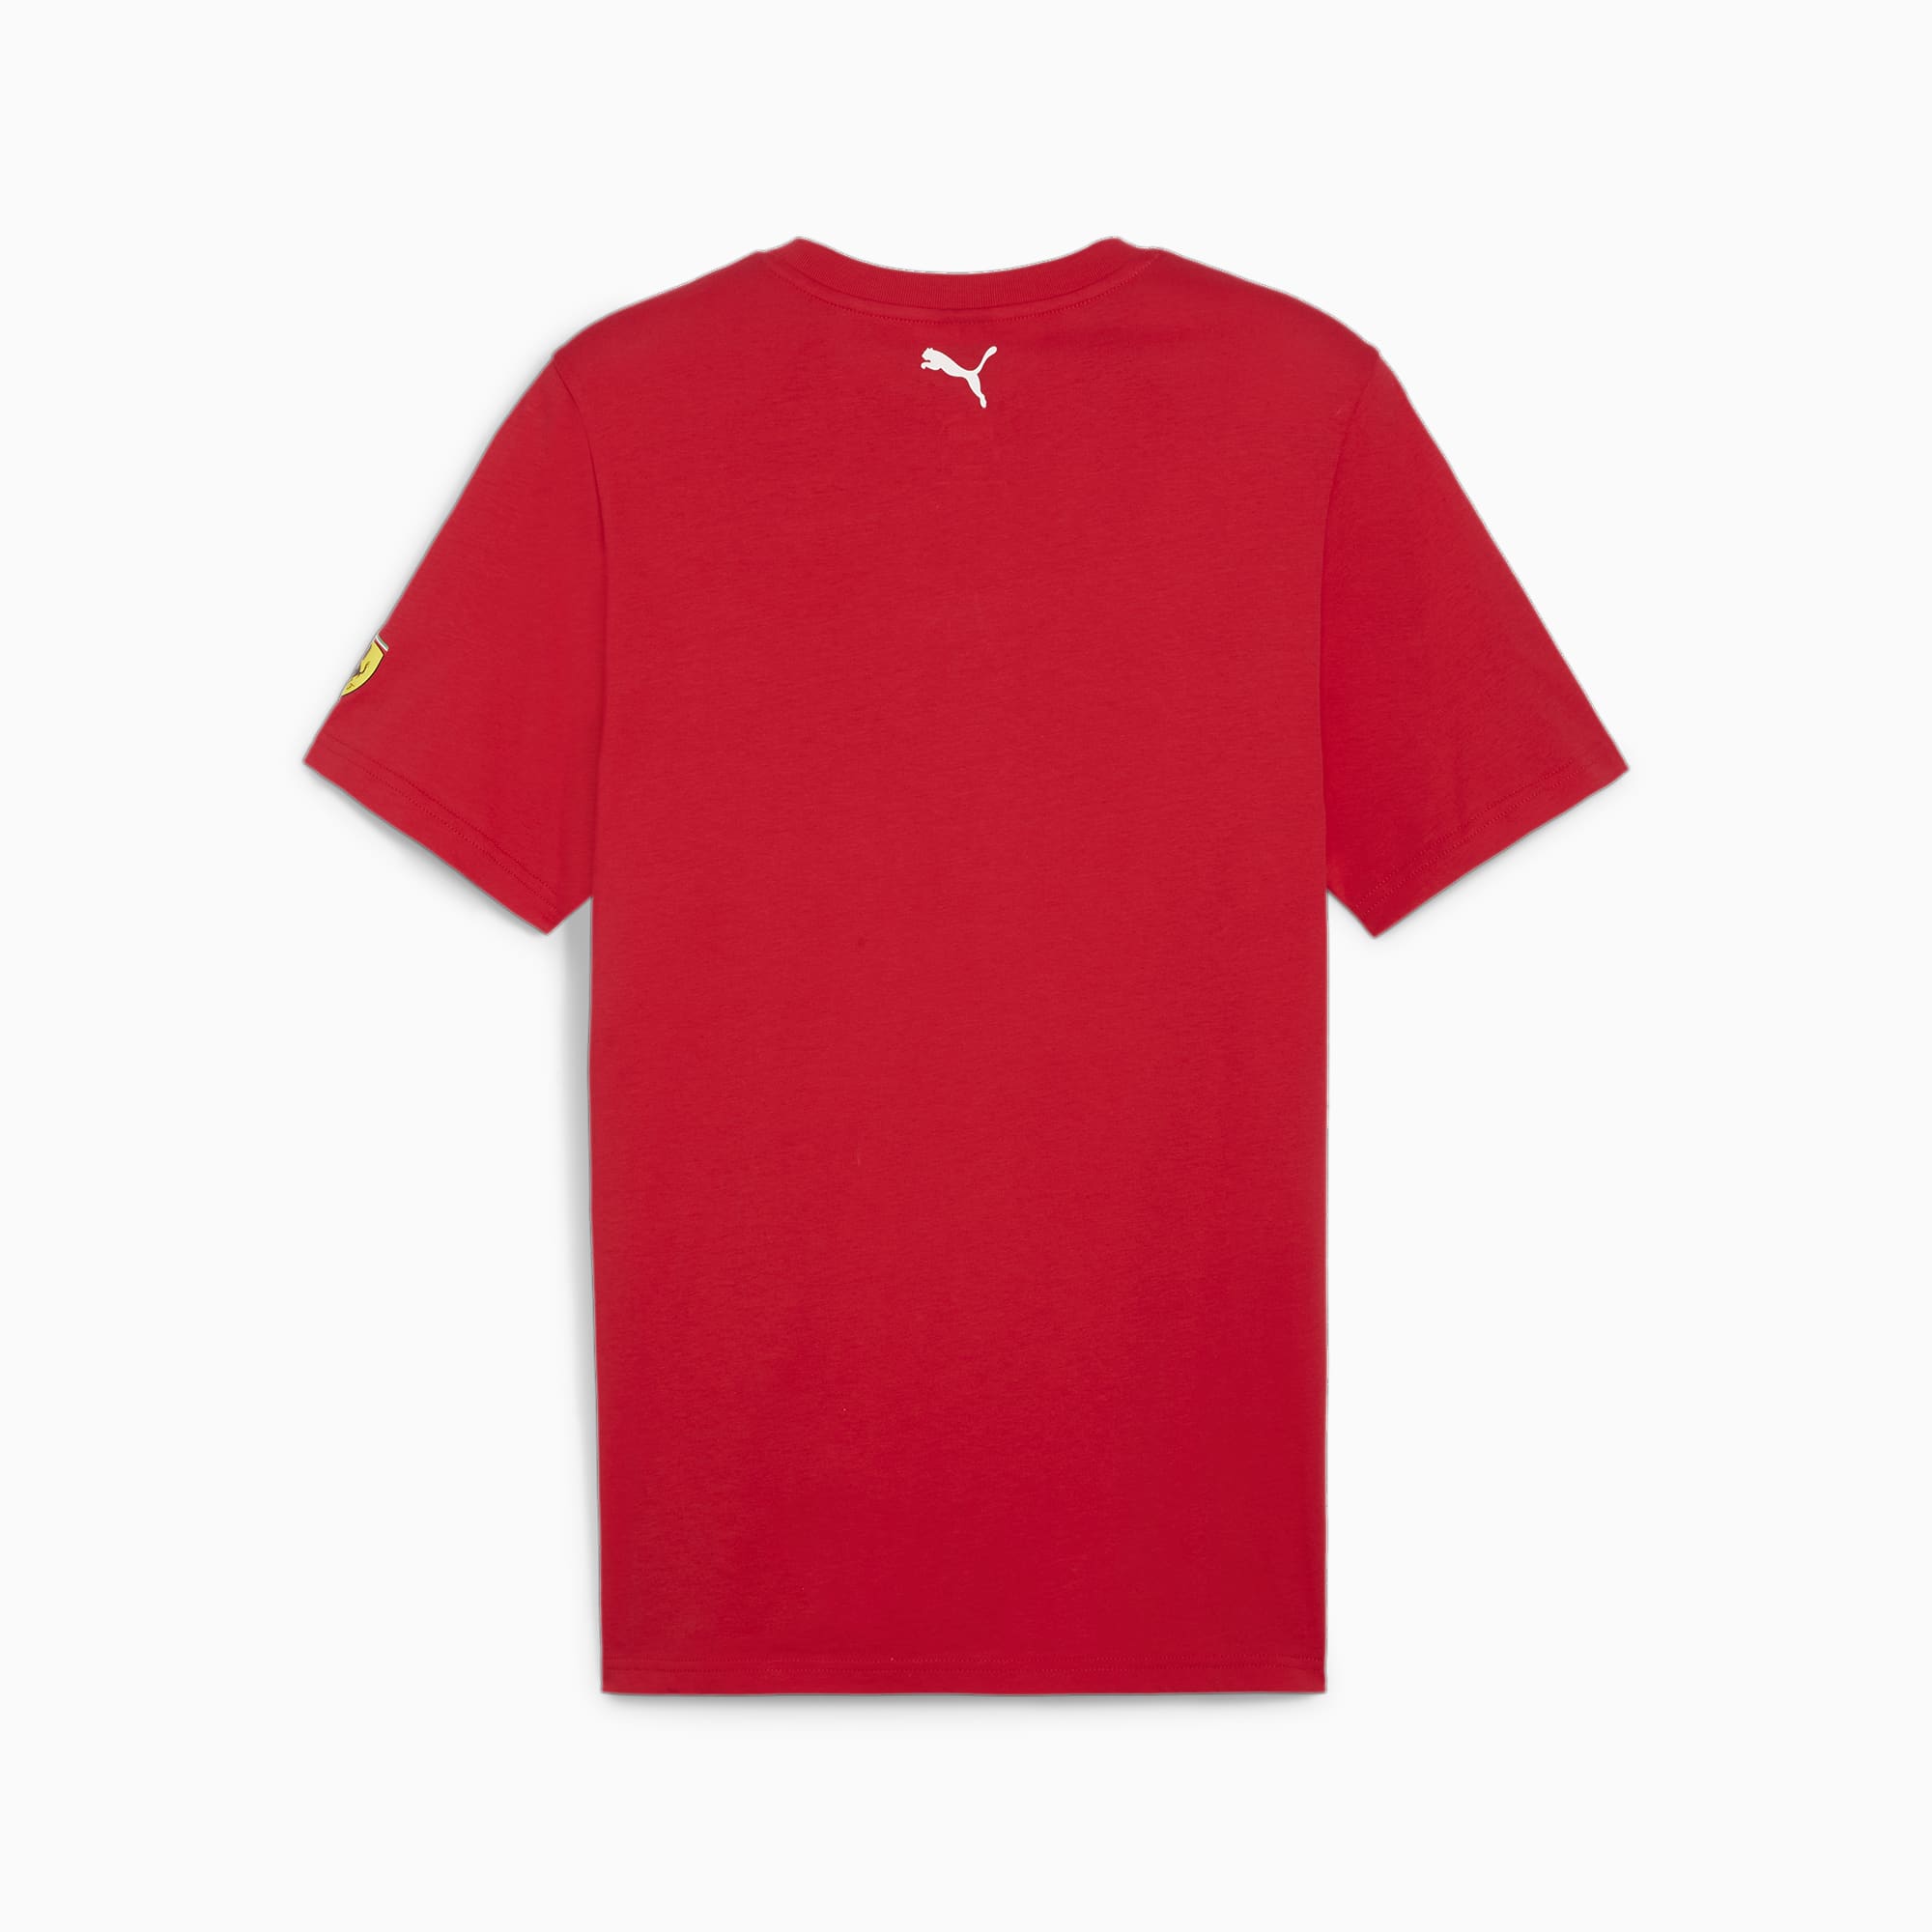 PUMA Scuderia Ferrari Men's Motorsport Race Graphic T-Shirt, Red, Size XS, Clothing